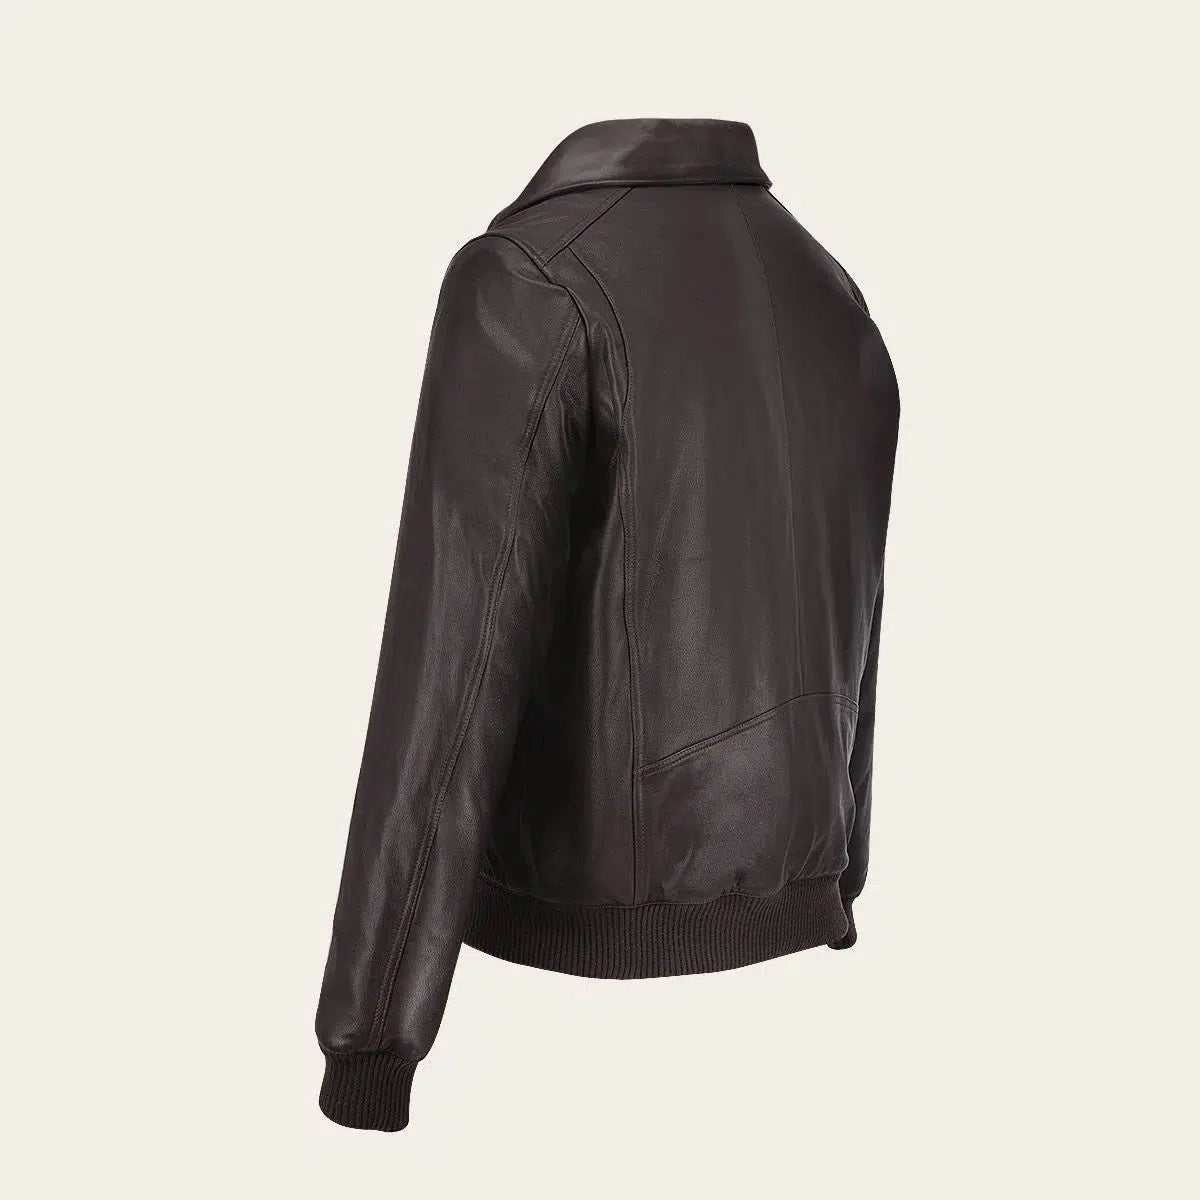 HCHI008 - Cuadra brown dress casual fashion aviator leather jacket for men-Kuet.us